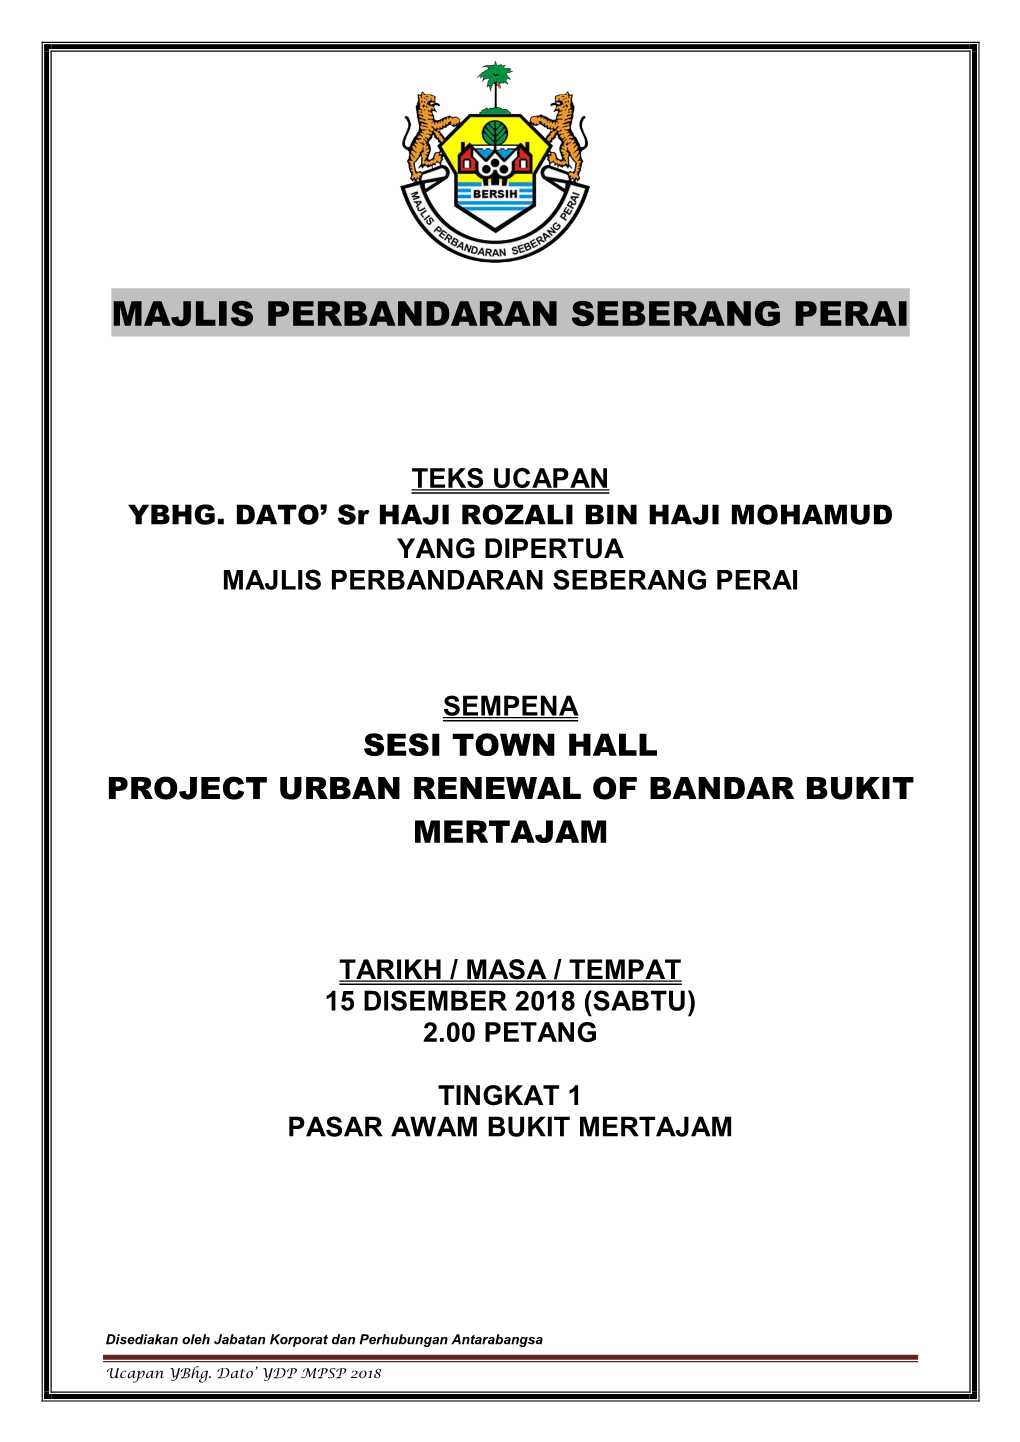 Sesi Town Hall Project Urban Renewal of Bandar Bukit Mertajam